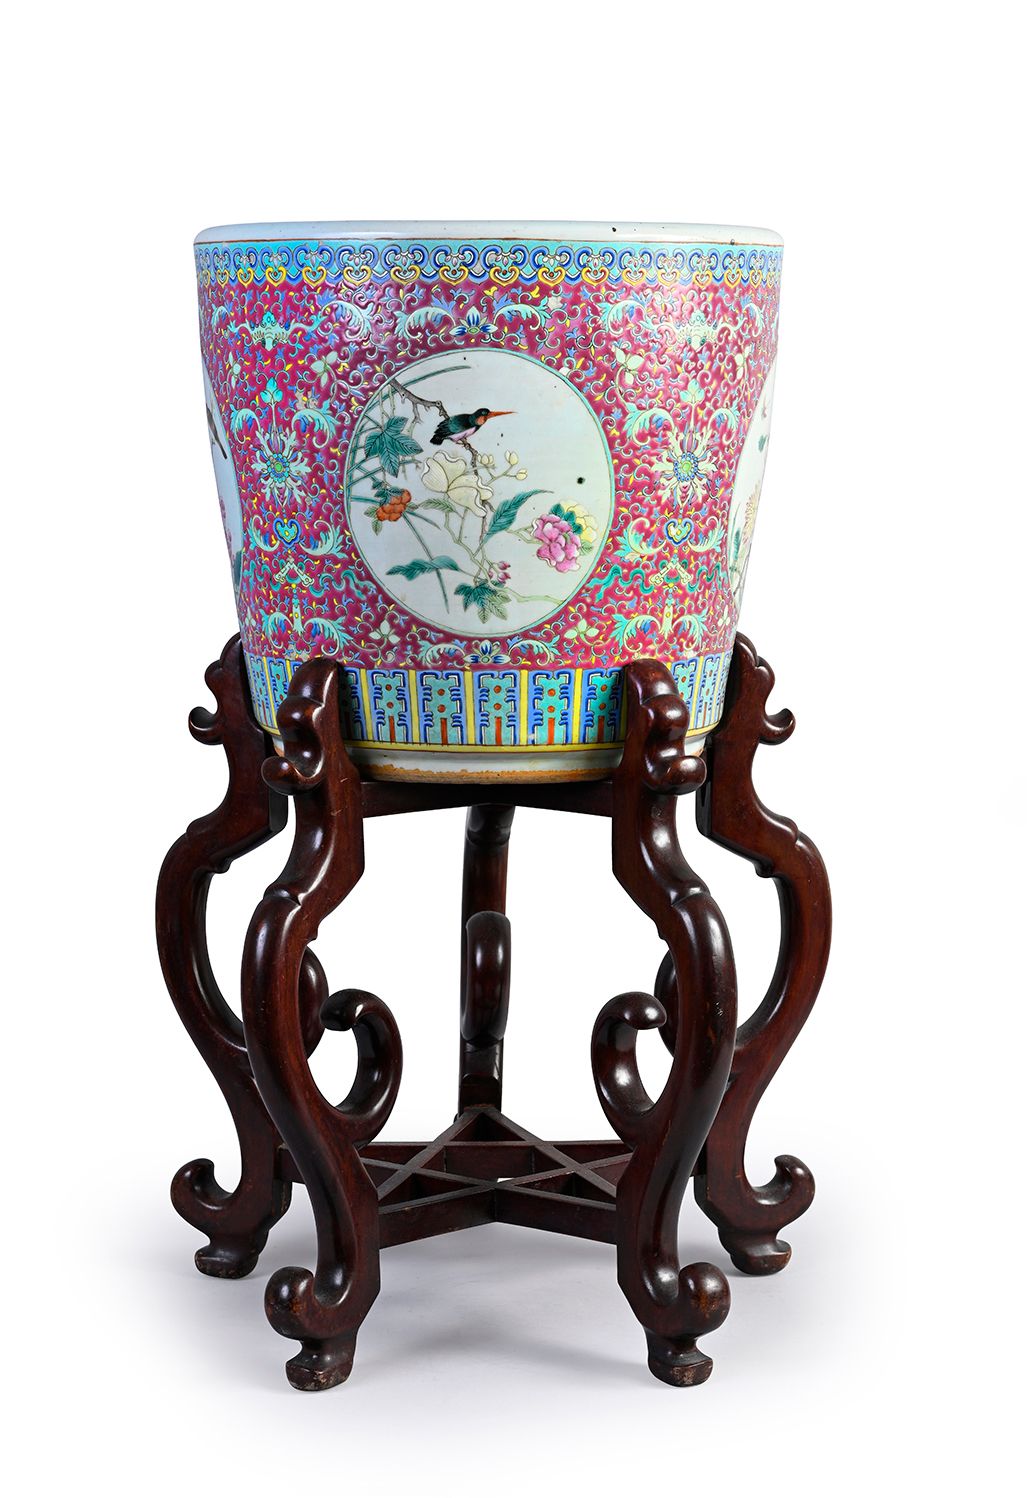 Null 一个大的粉彩瓷盆，红底，装饰着枝头的鸟和花，放在一个镂空的木质底座上。
中国，19世纪。
直径：40厘米 - 高：36厘米。